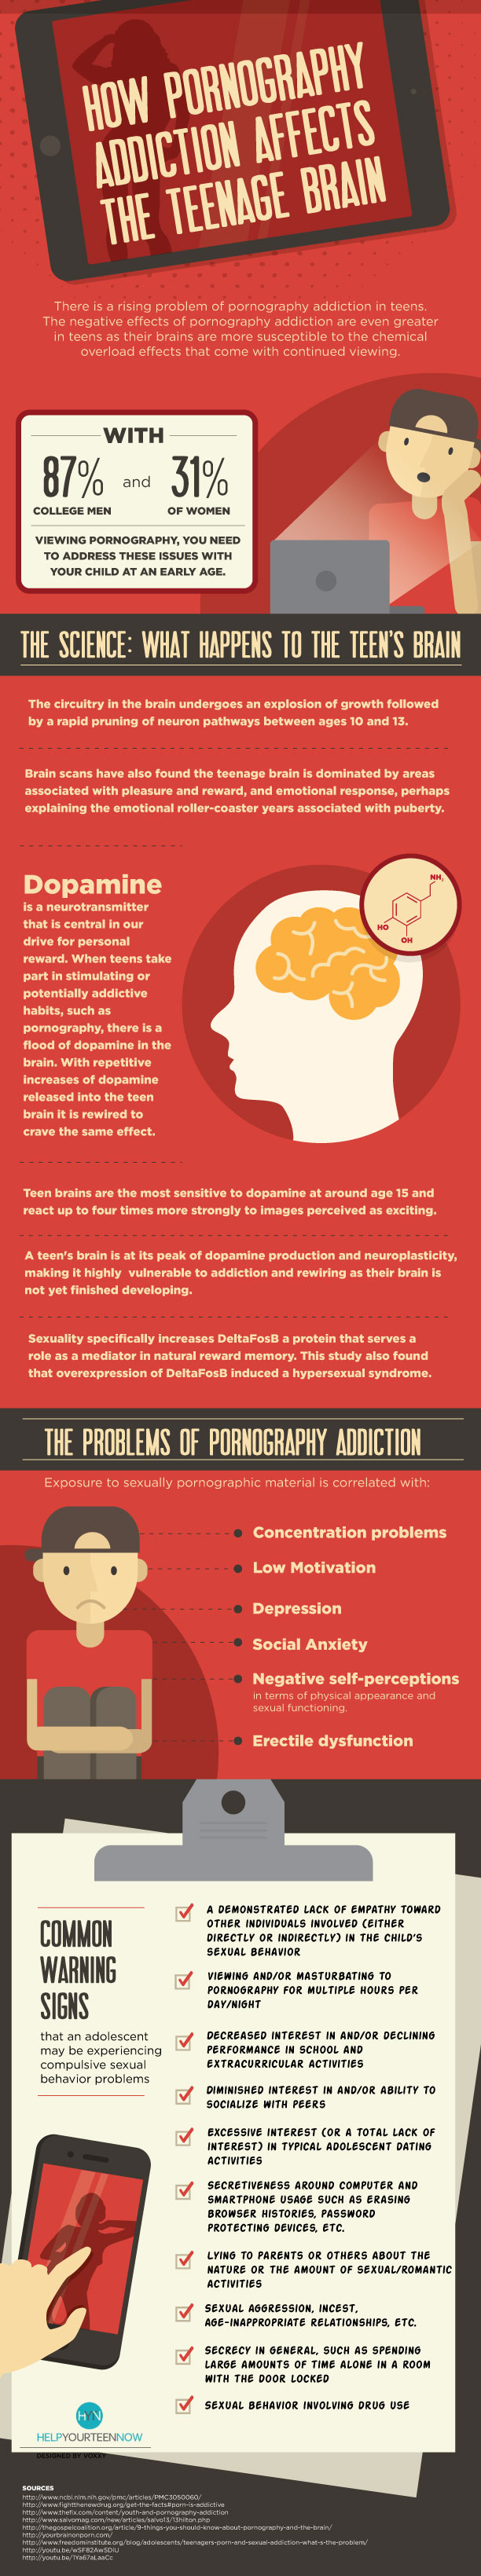 Teen-pornography-addiction-infographic-plaza